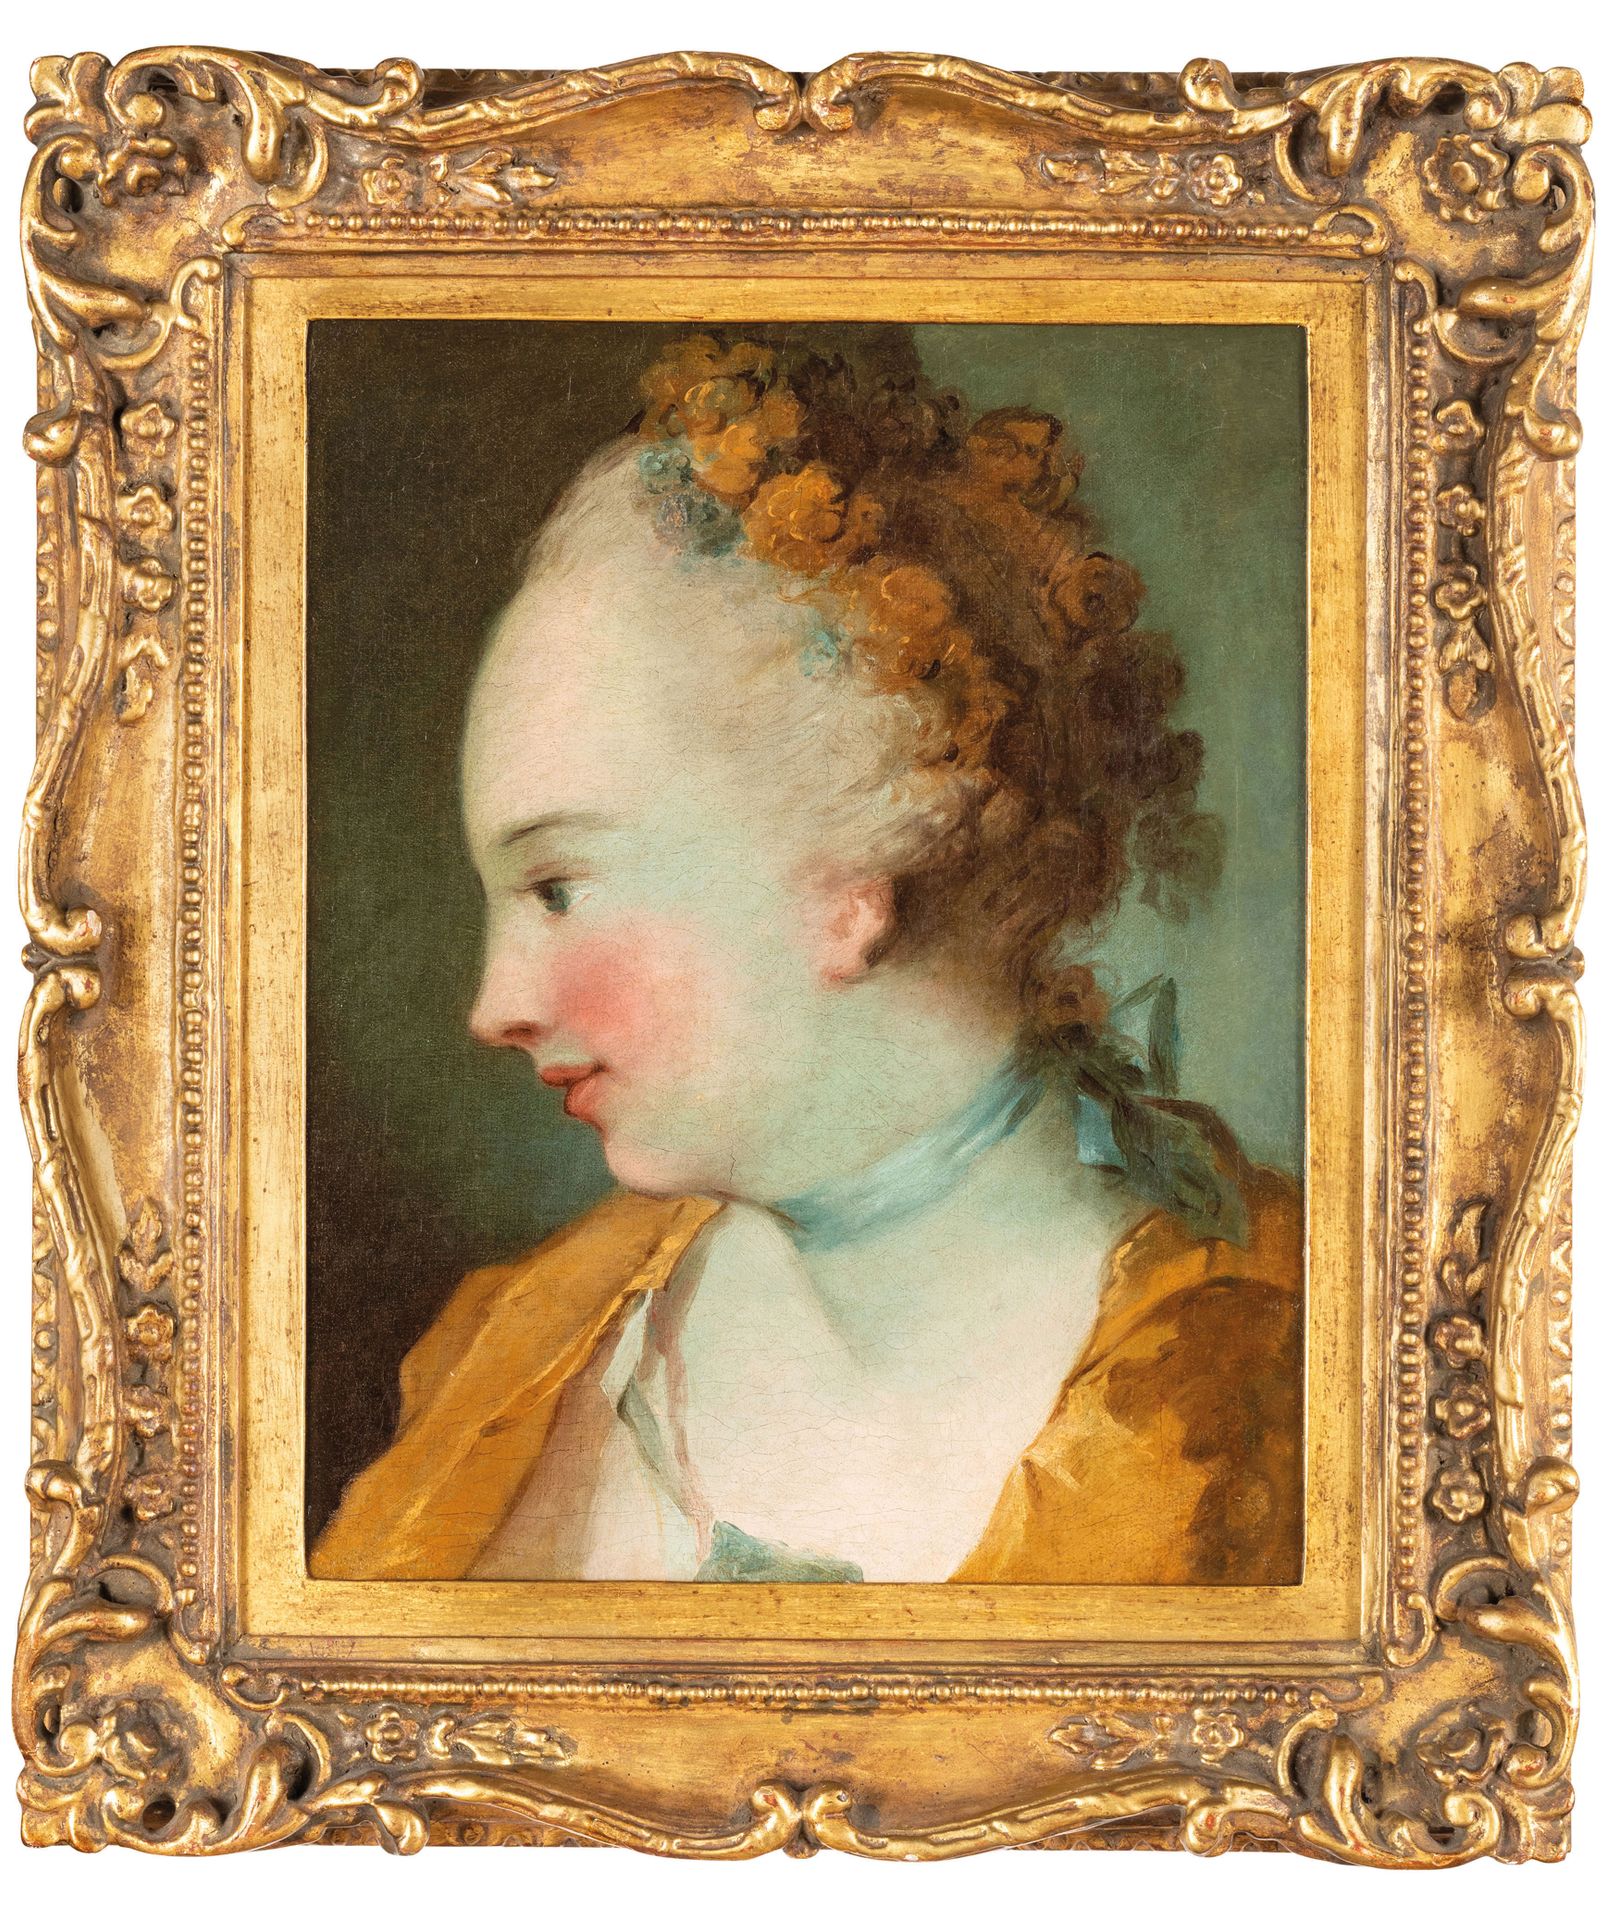 PHILIPPE MERCIER (attr. A) (柏林，1689年-伦敦，1760年）
女子侧面肖像
布面油画，41X33厘米

描绘了一位年轻女子的侧面&hellip;